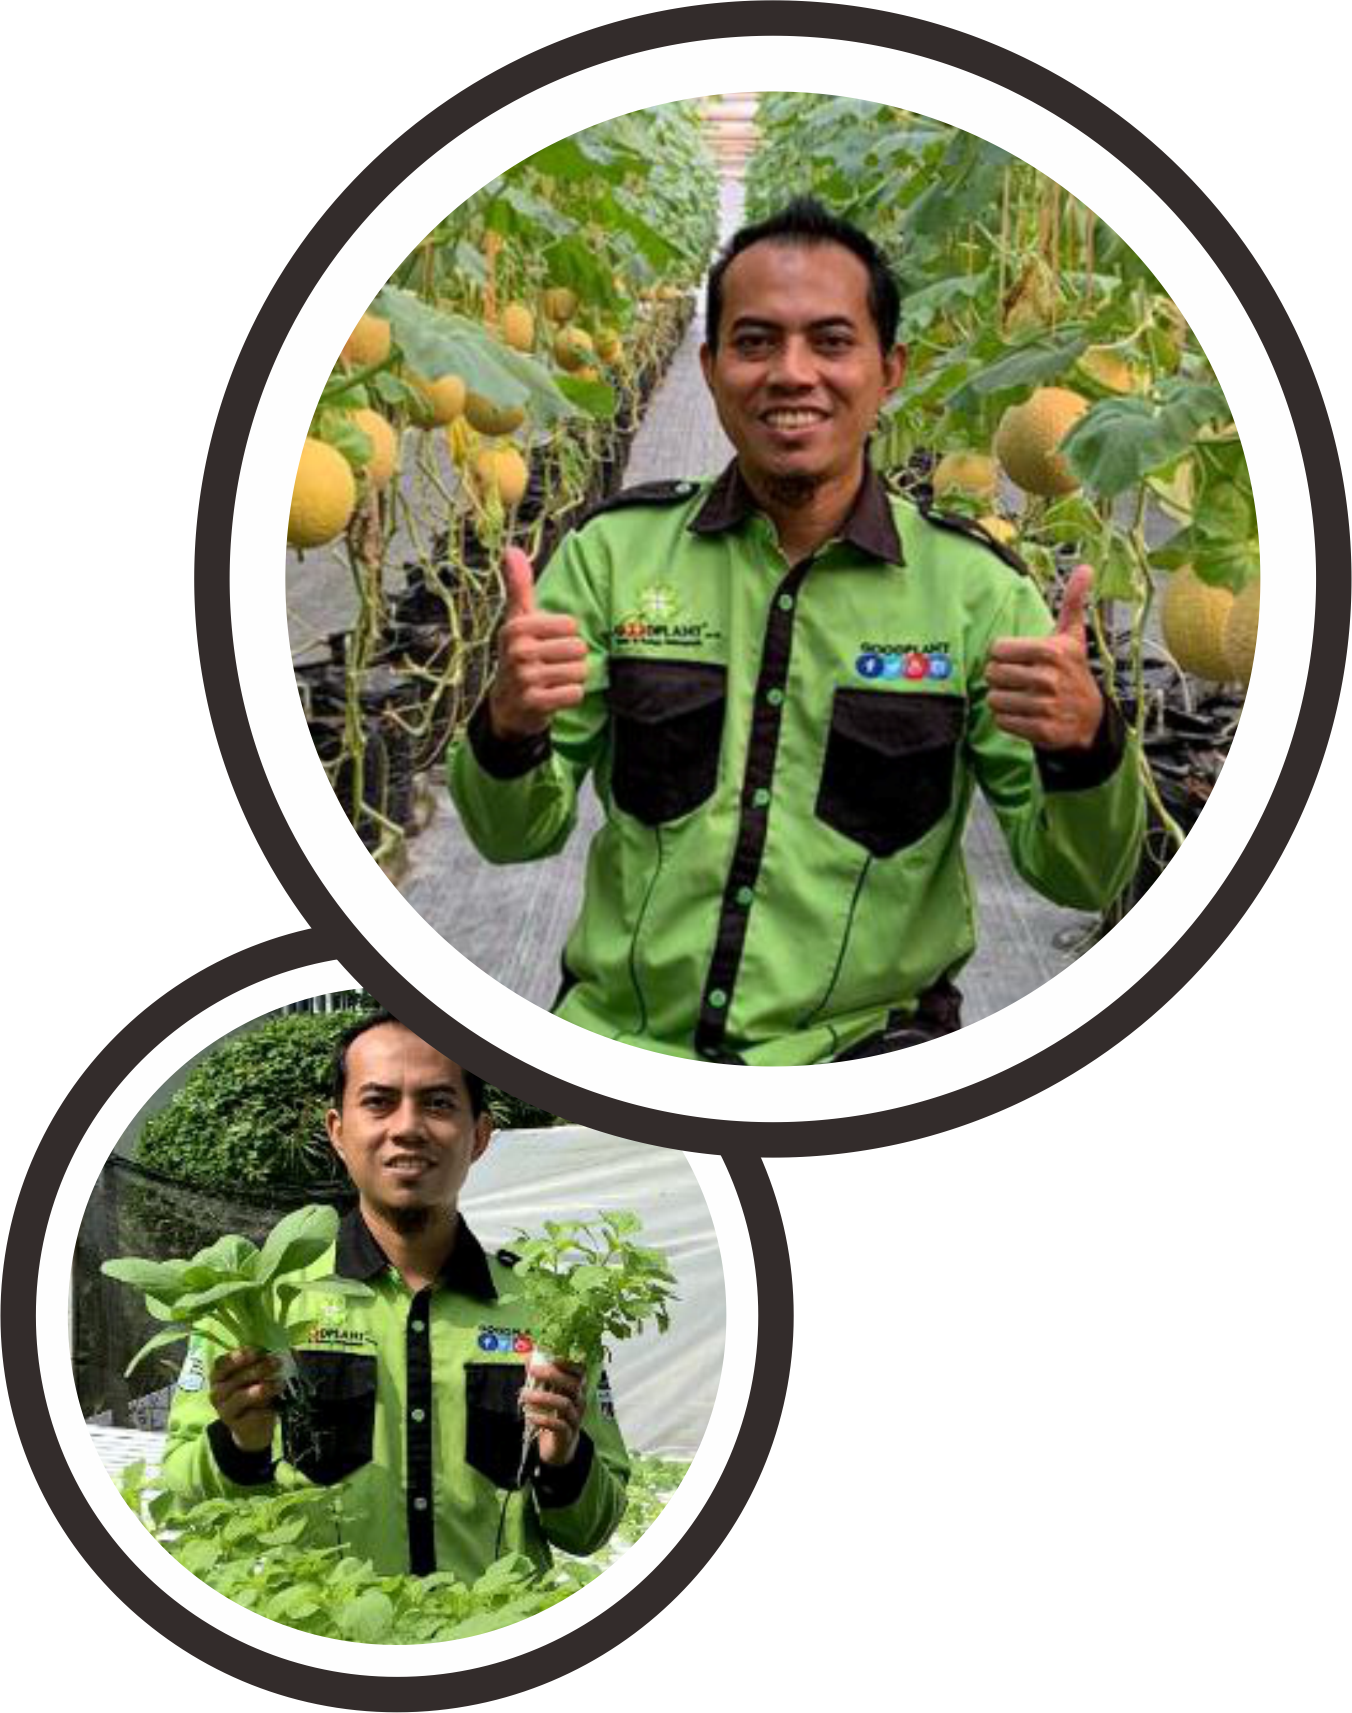 Pelatihan Hidroponik Melon OFFLINE Mei - PT. Sapto Bumi Hidroponik